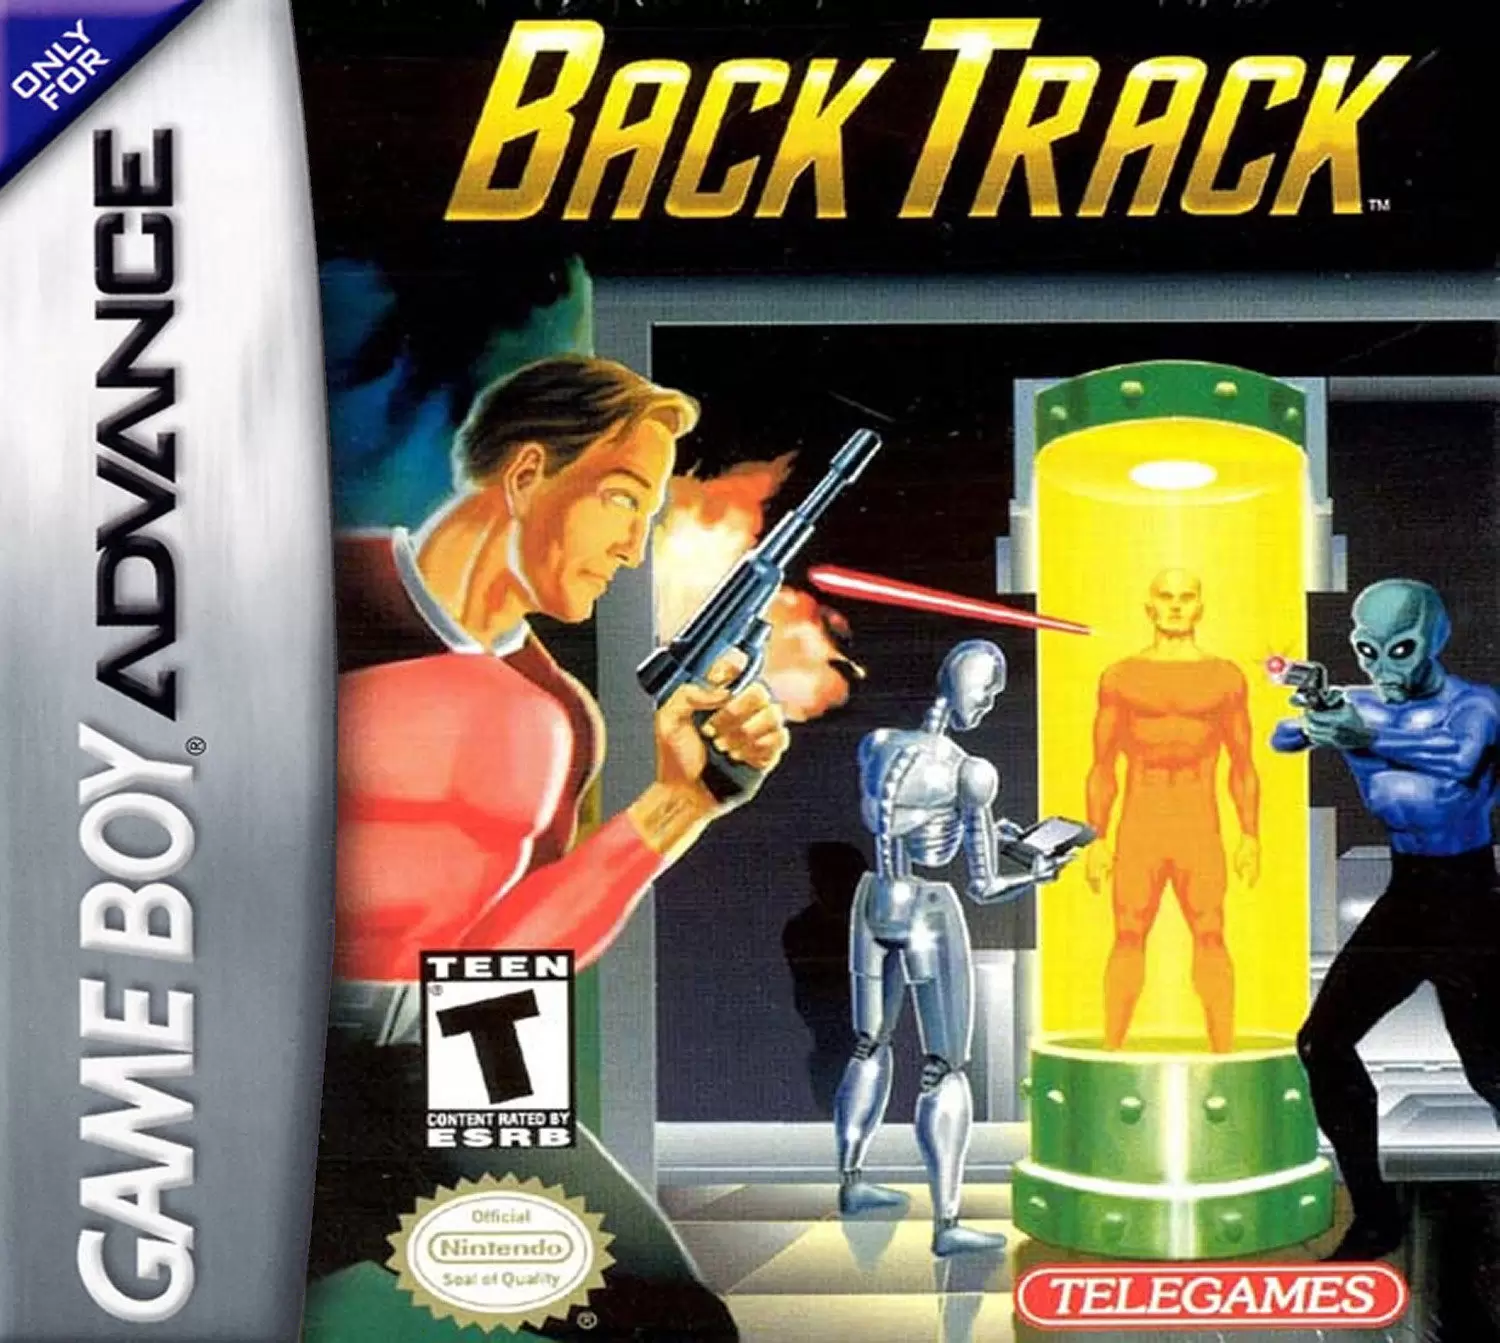 Game Boy Advance Games - BackTrack